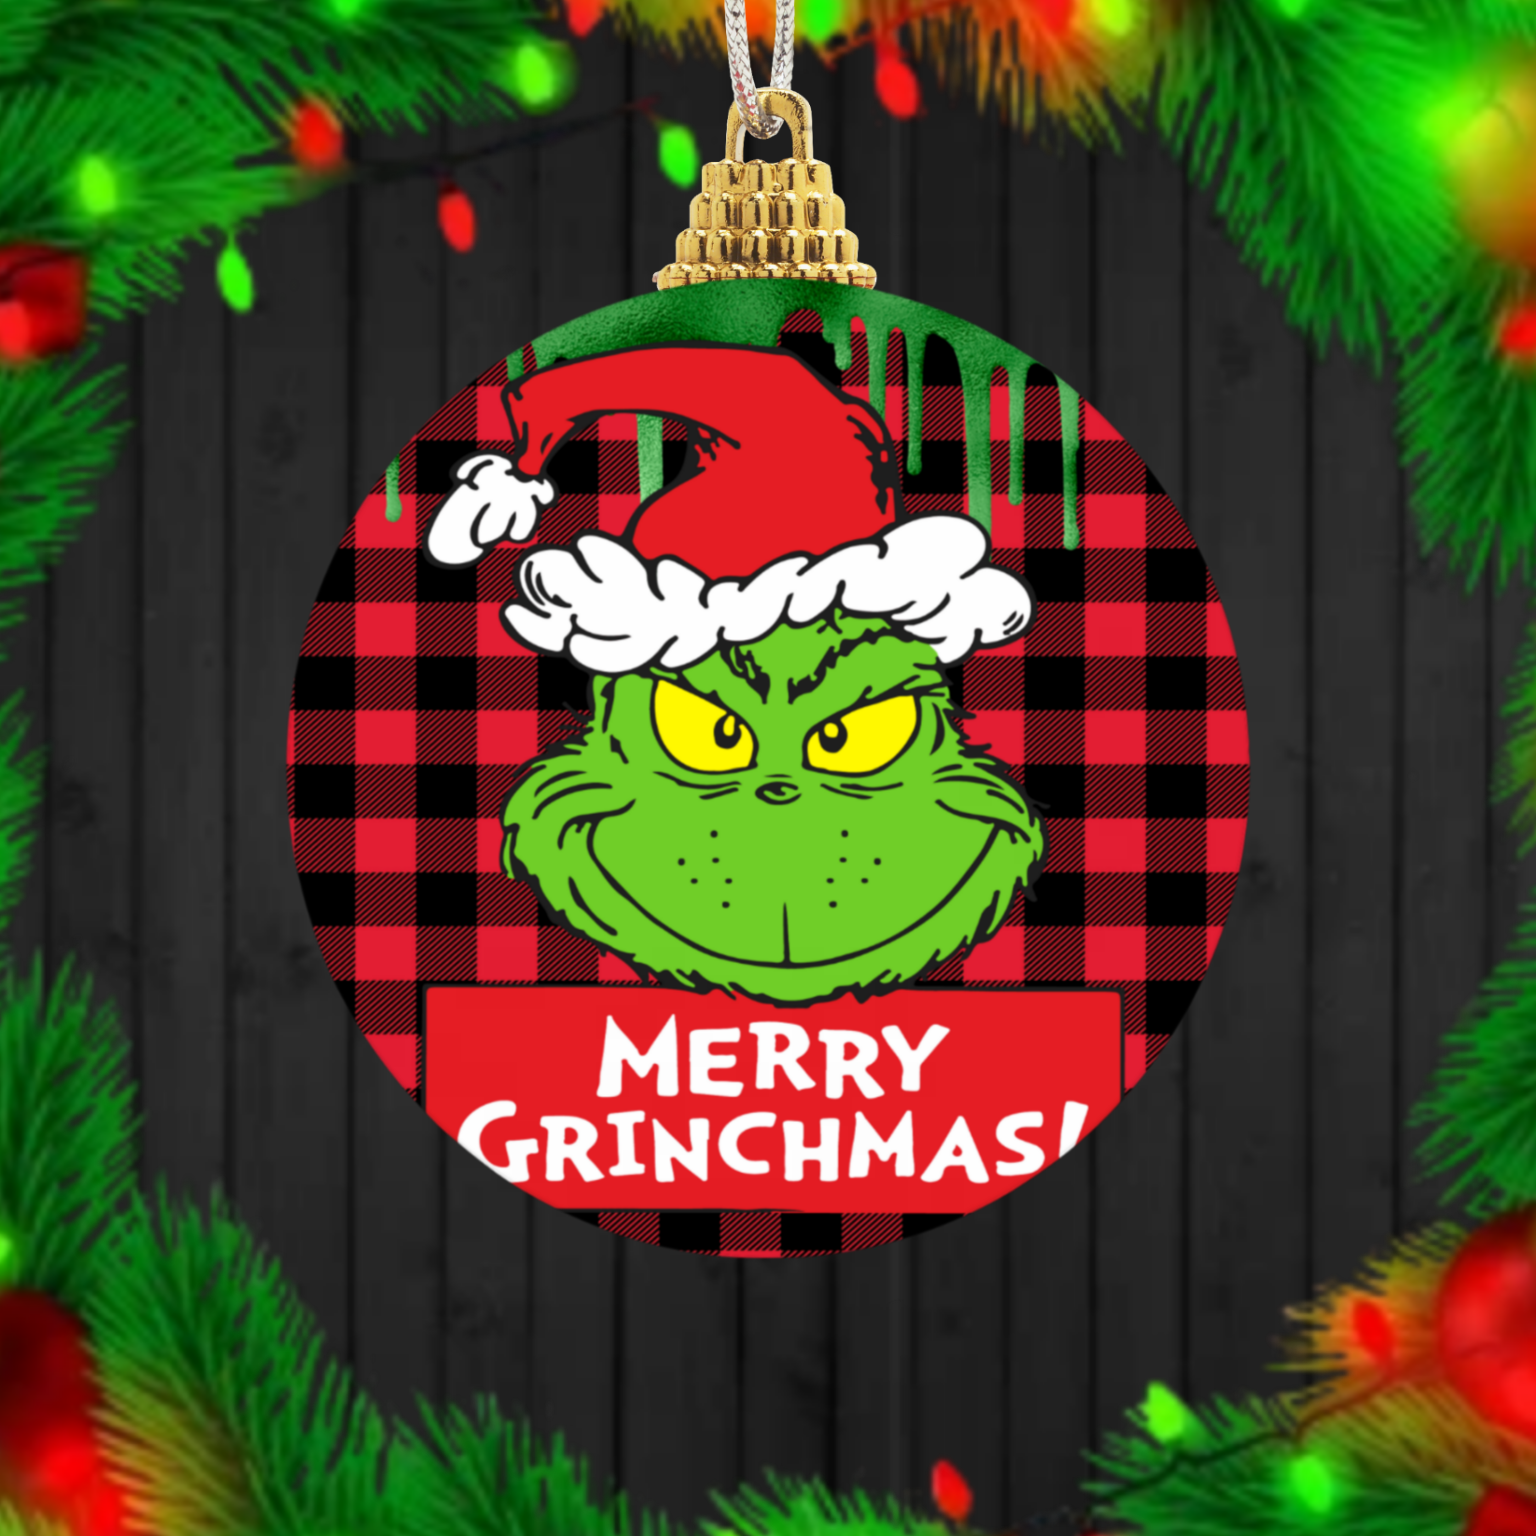 Grinch MUG TEMPLATE, How the Grinch stole the Christmas mug template,  Digital download, christmas designs, christmas sublimation